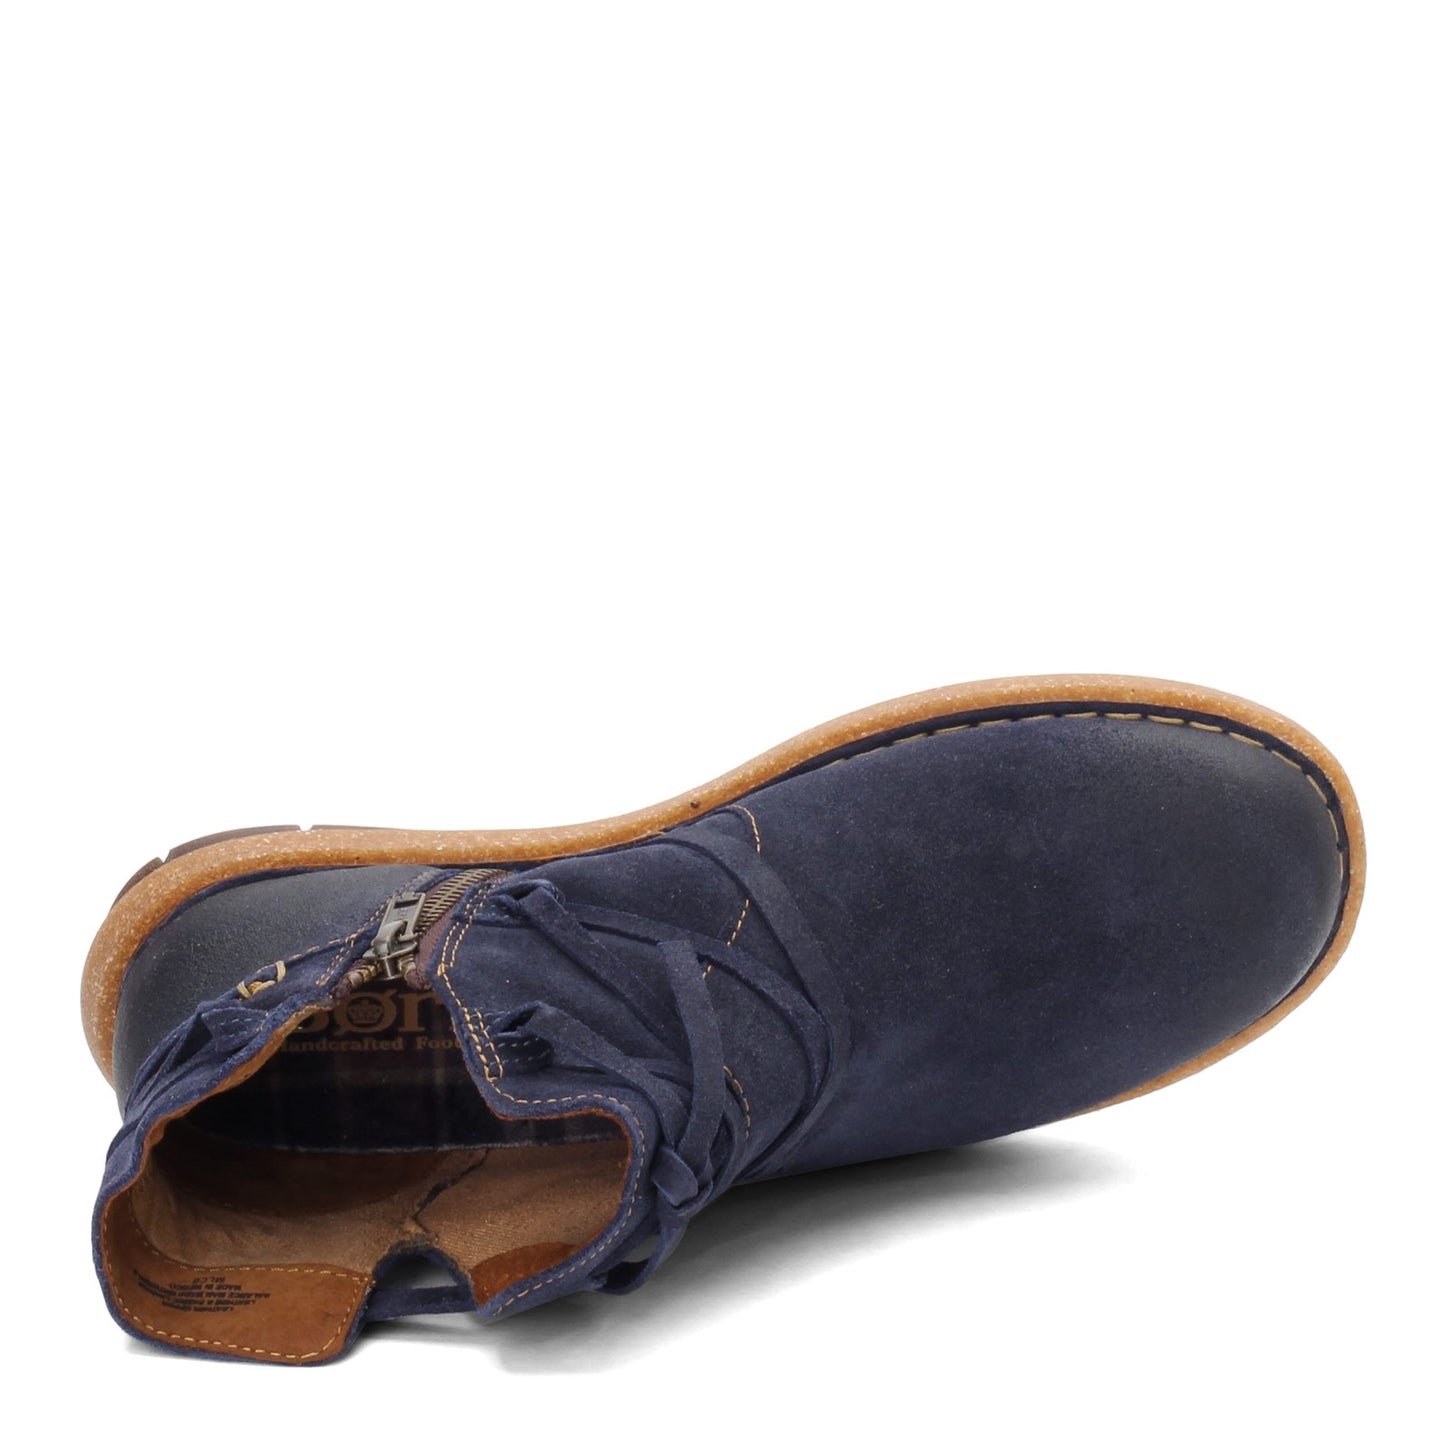 Peltz Shoes  Women's Born Tarkiln Ankle Boot Indigo Distressed BR0013634